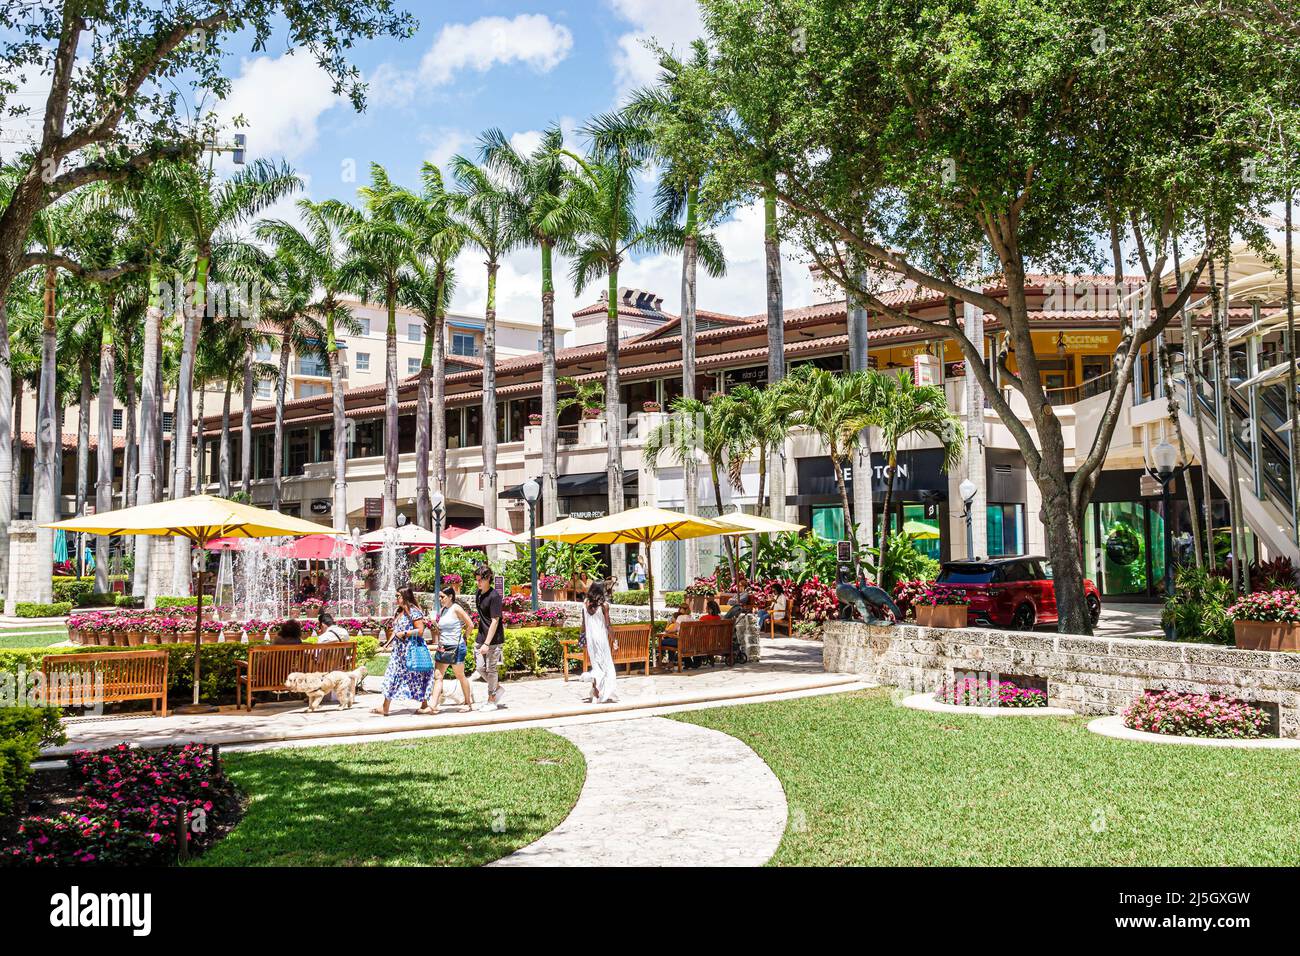 Miami Florida Coral Gables Shops en el exclusivo centro comercial al aire libre Merrick Park Foto de stock